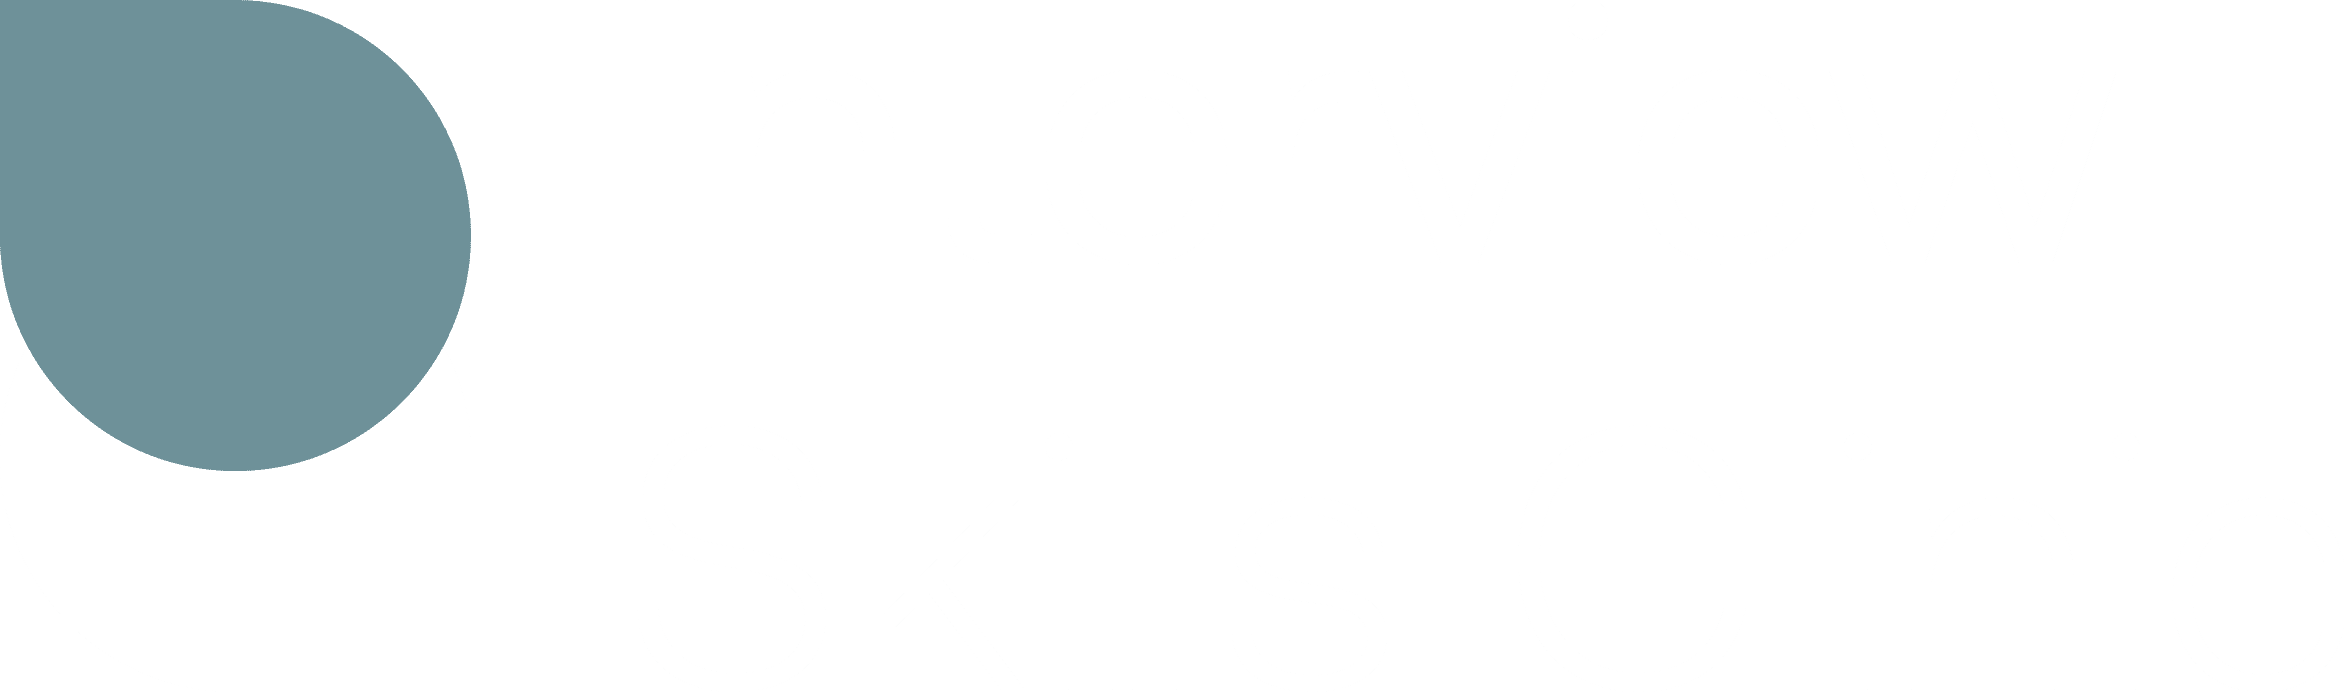 Interview Skills Clinic logo